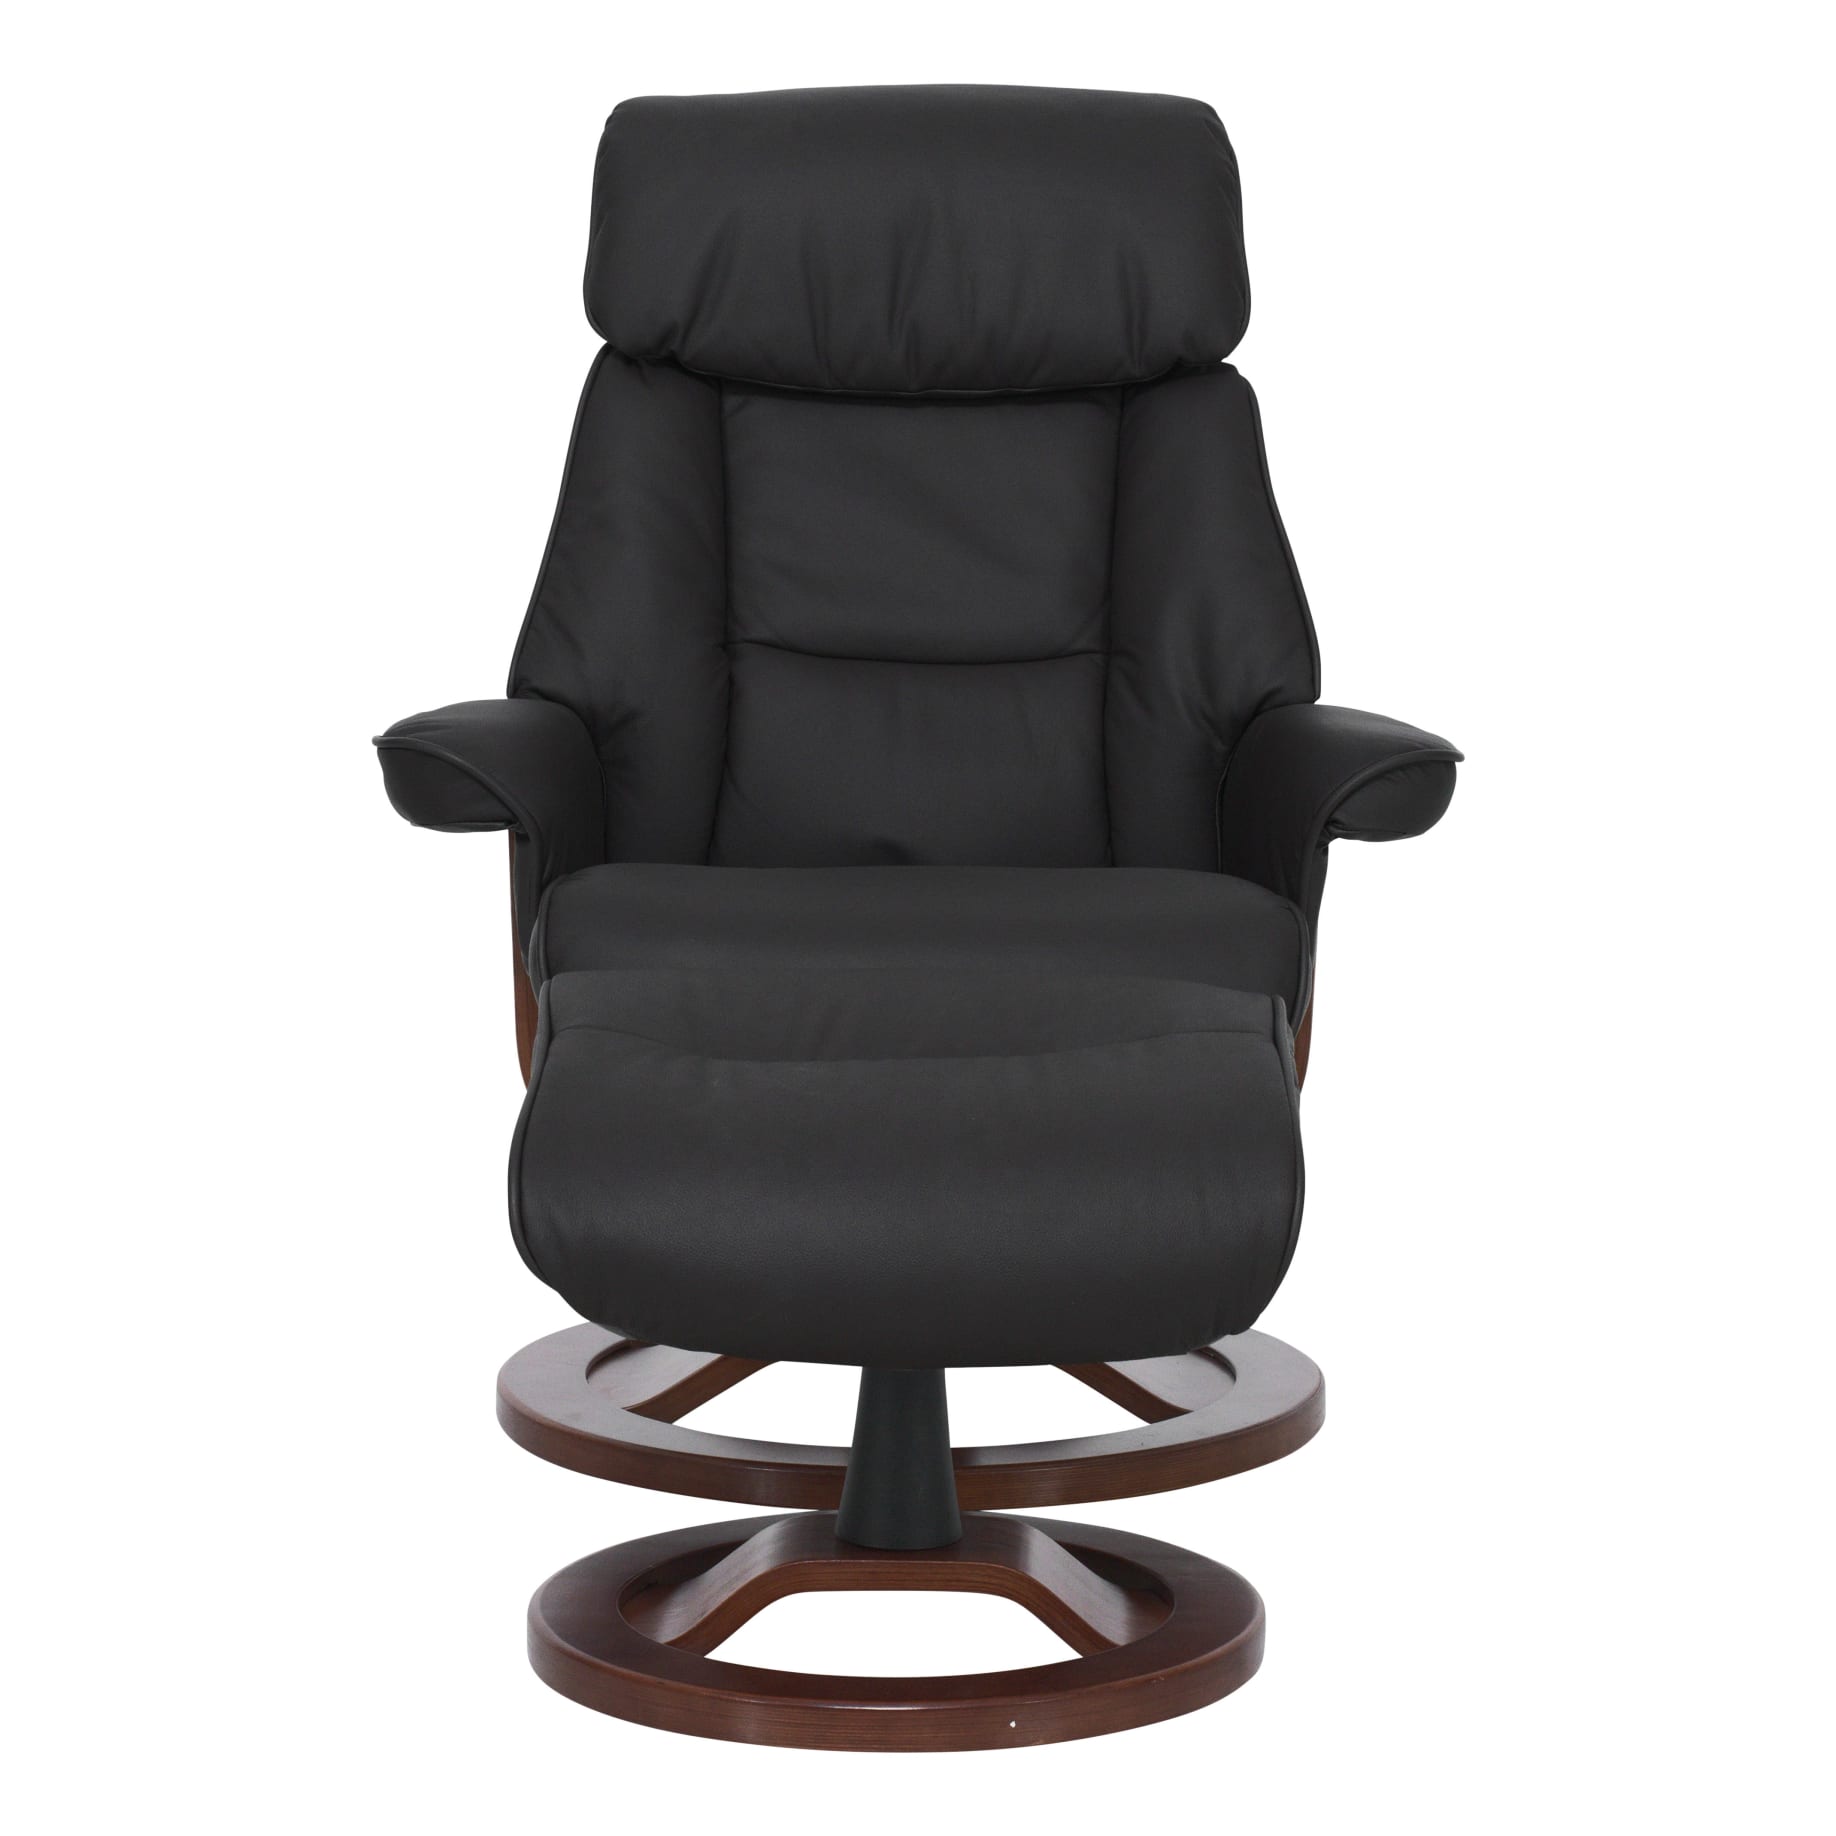 Reggie Recliner Chair + Ottoman in Black / Chocolate Leg